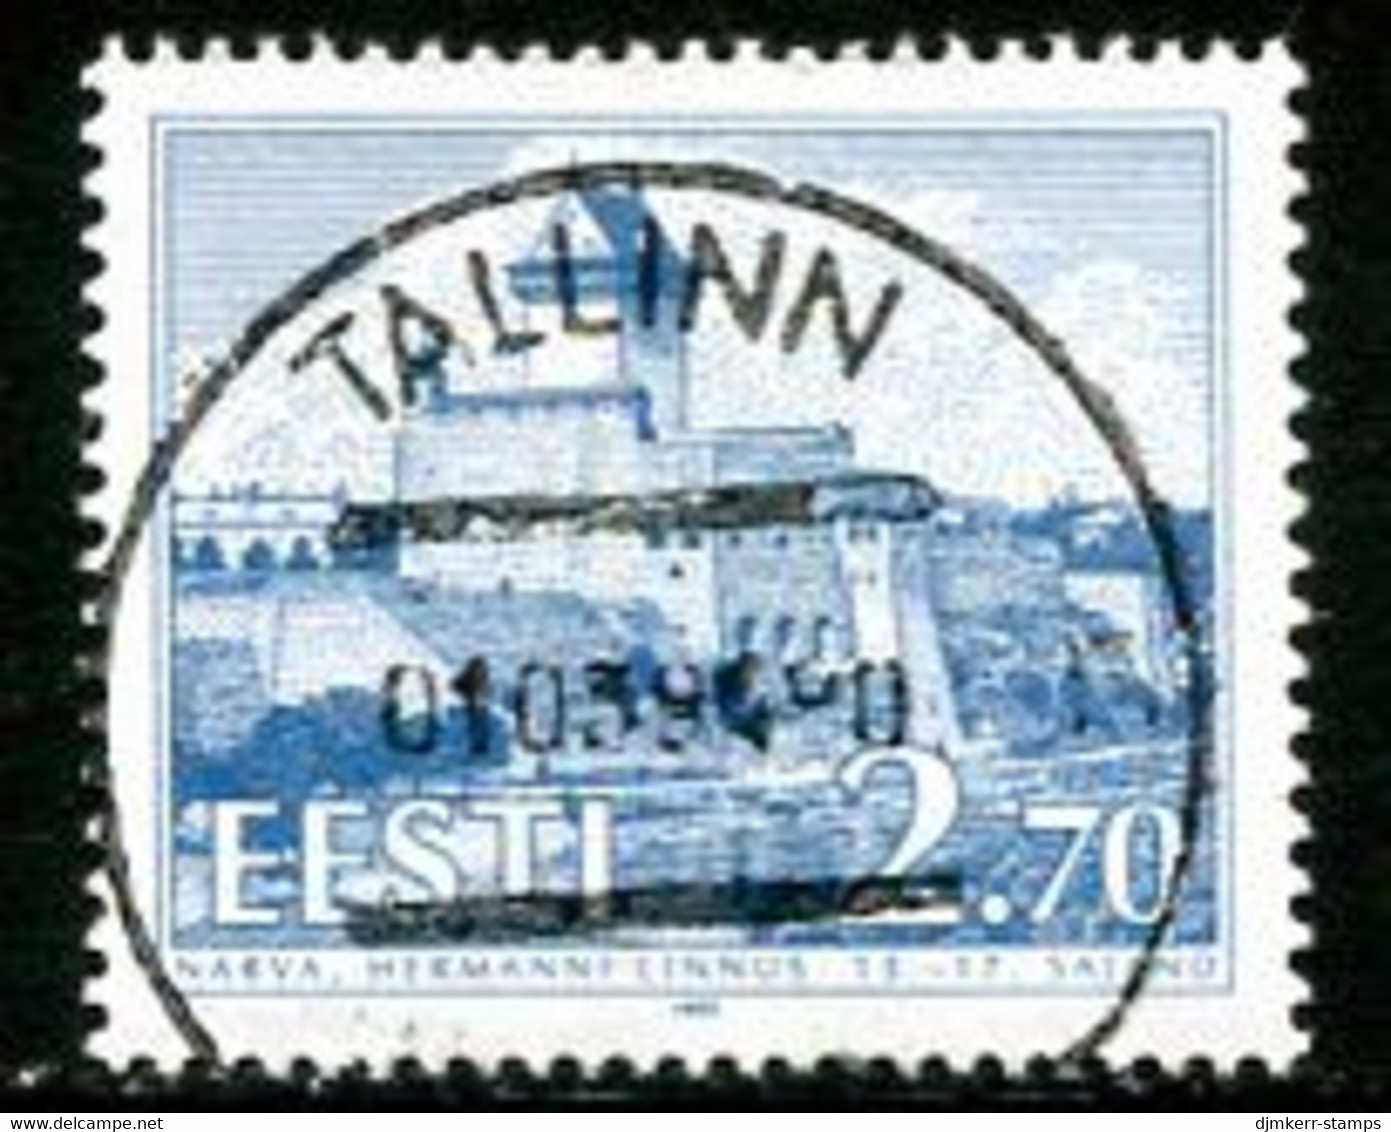 ESTONIA 1993 Hermannsburg 2.70 Kr. Used.  Michel 218 - Estonia